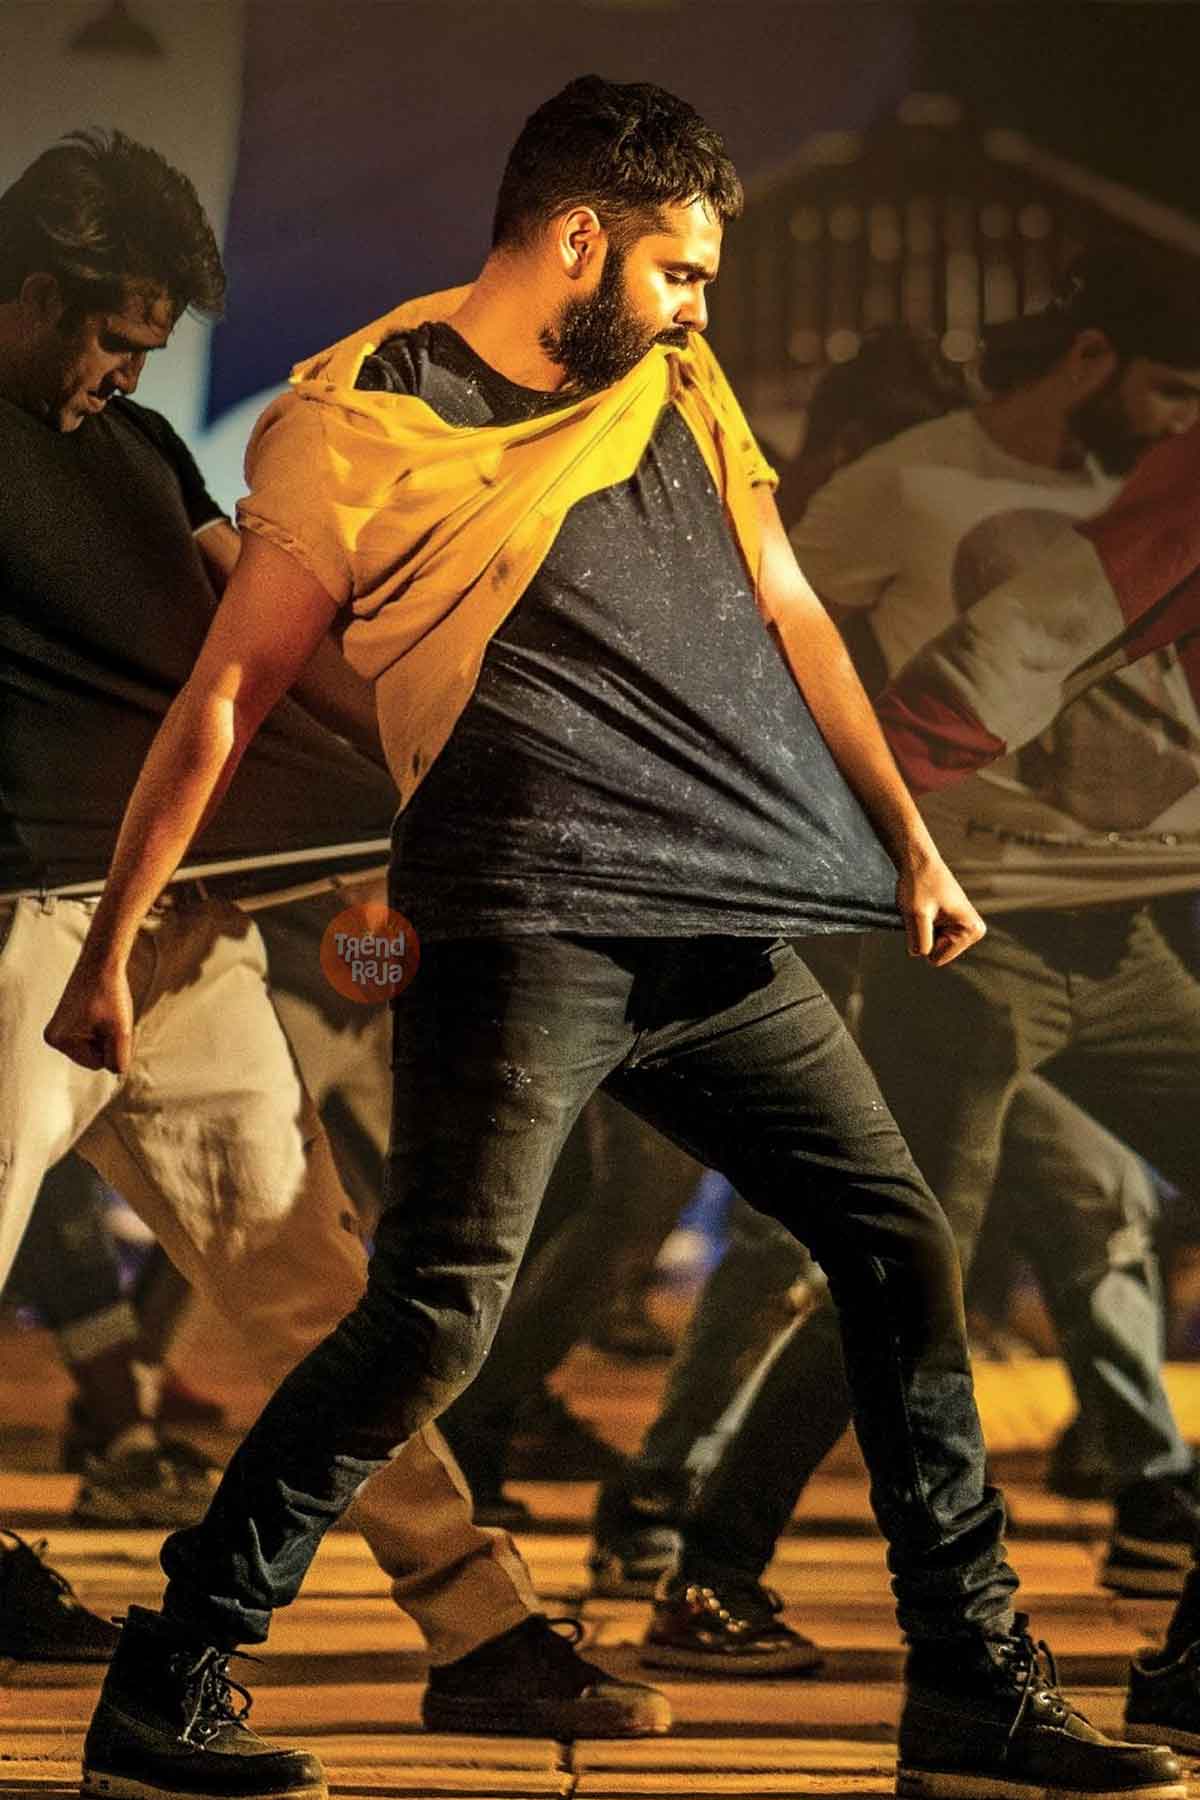 RED (2021) Telugu Movie HD posters, ultra hd images - Trend raja